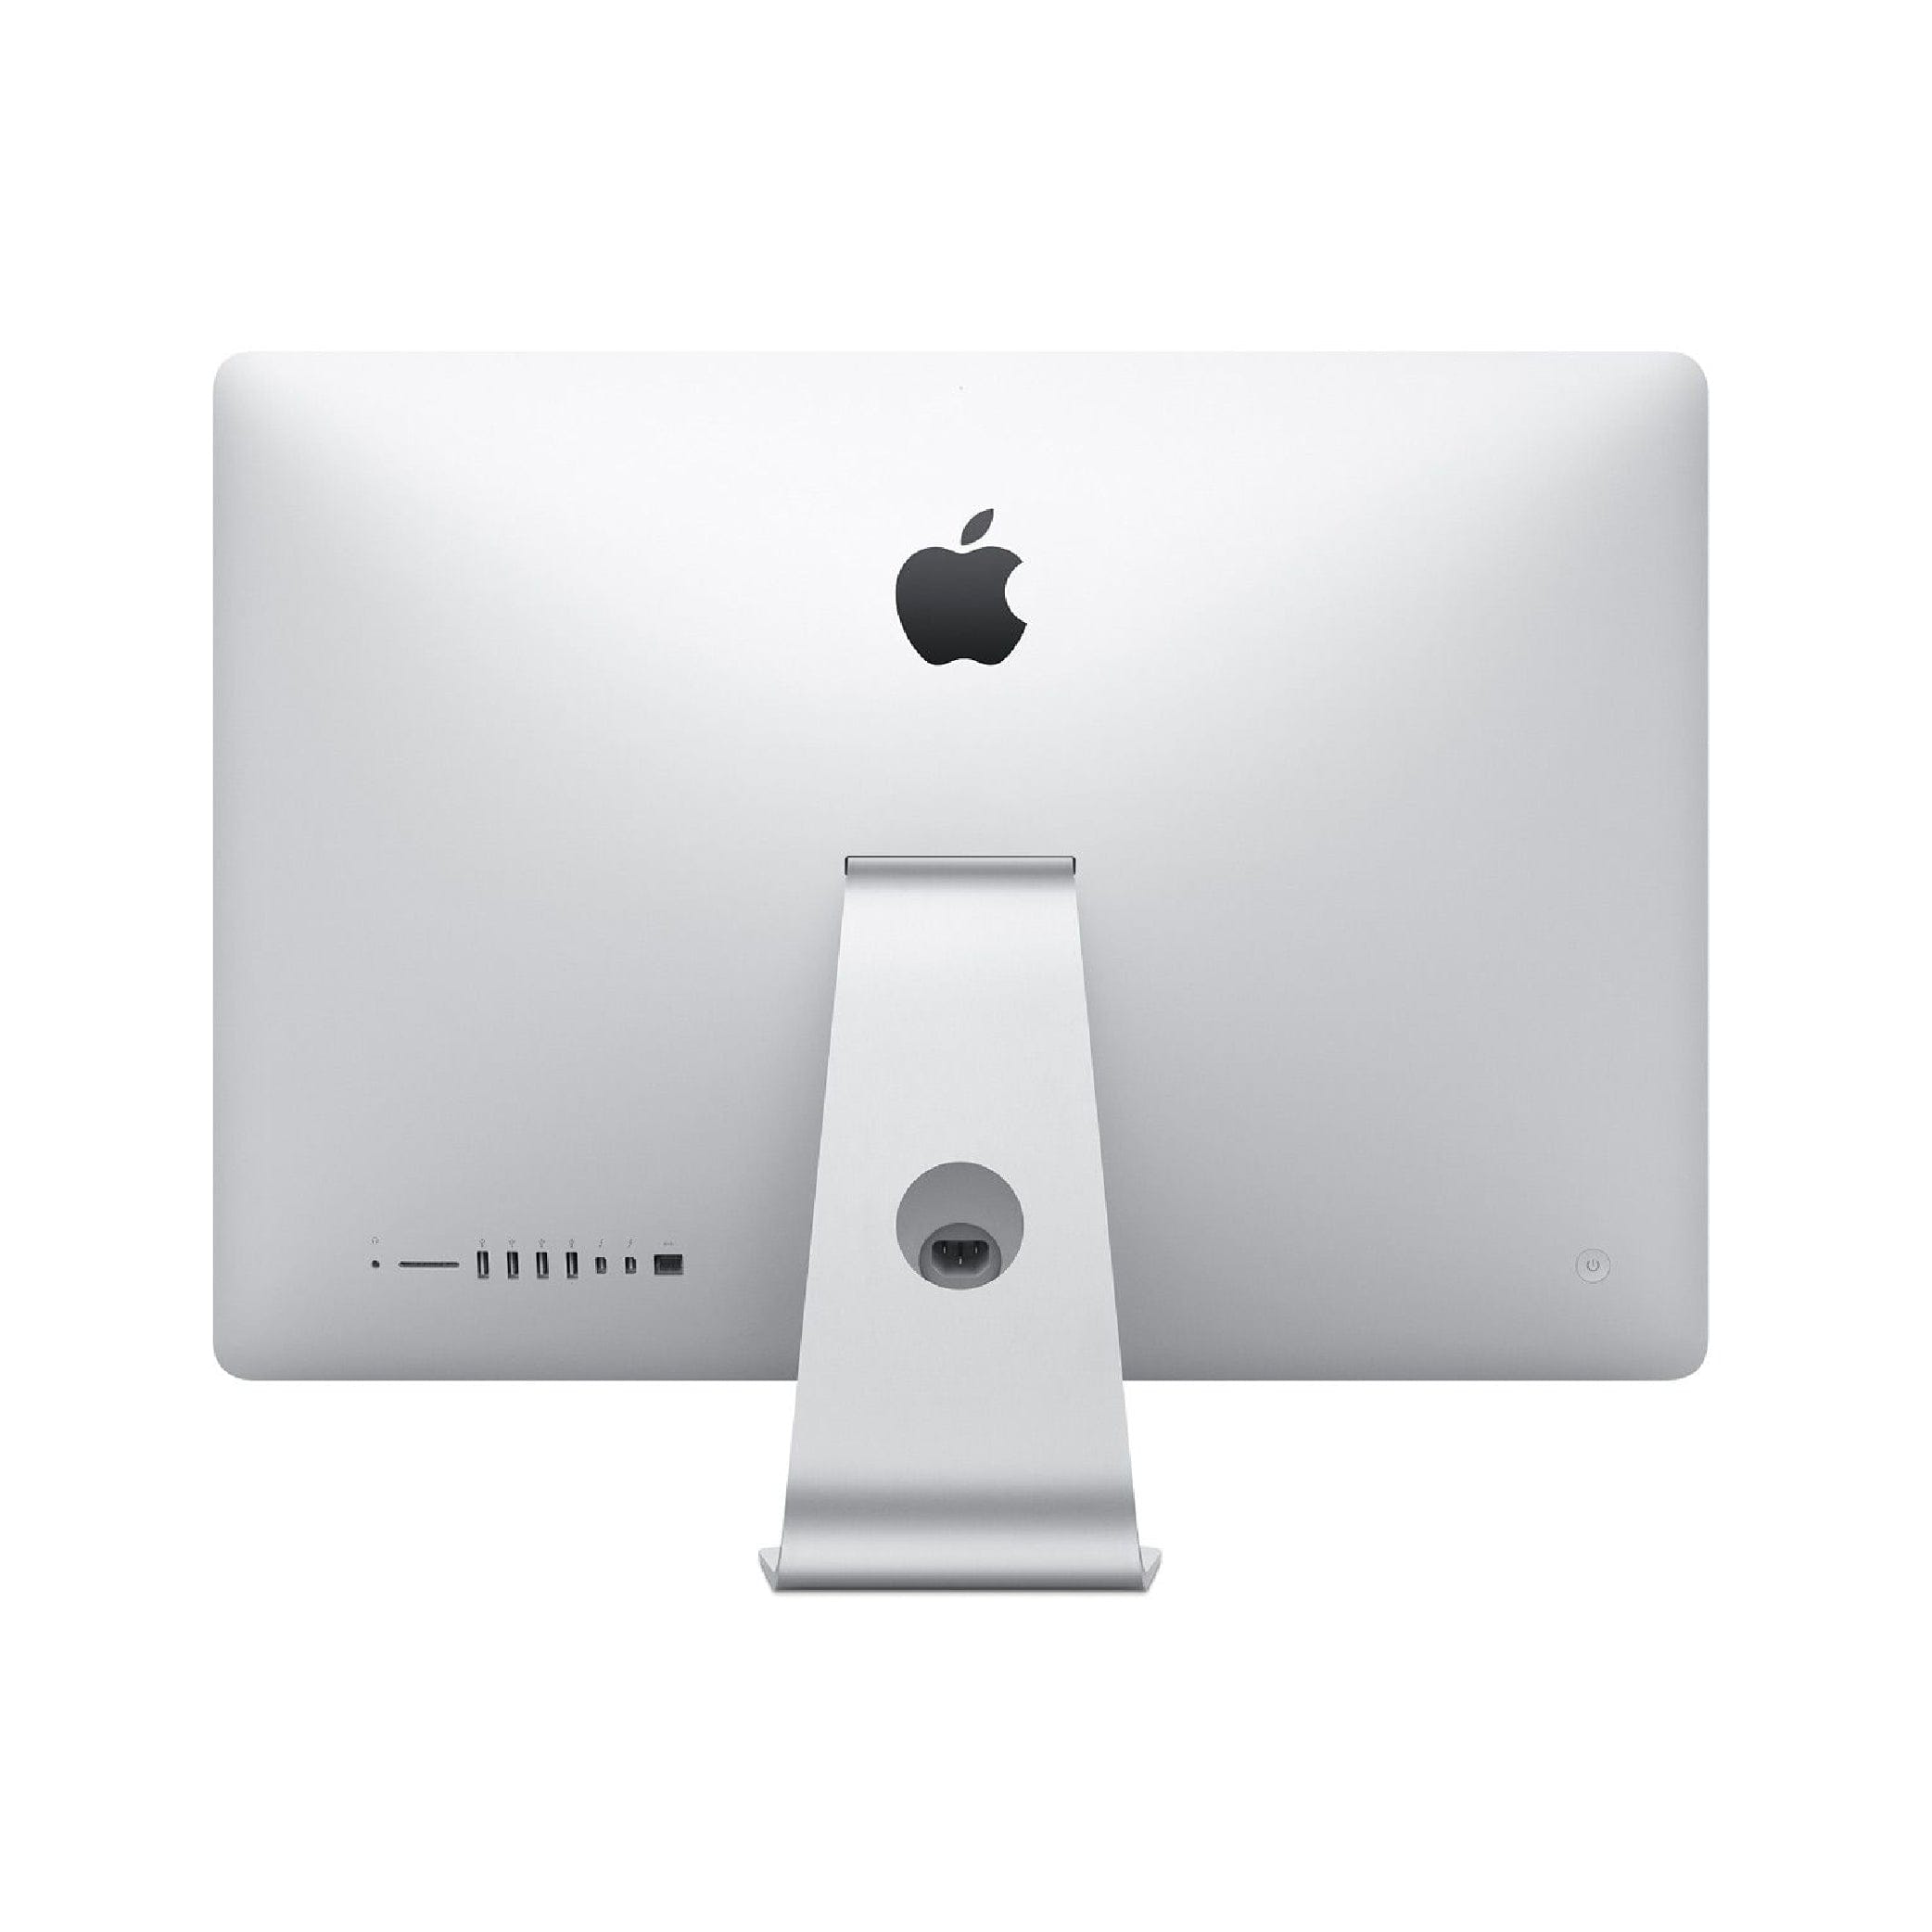 Apple - iMac 27" with Retina 5k display - (2017) - Core i5 - 8GB - 1TB Fusion Drive - Silver - (MNEA2LL/A)